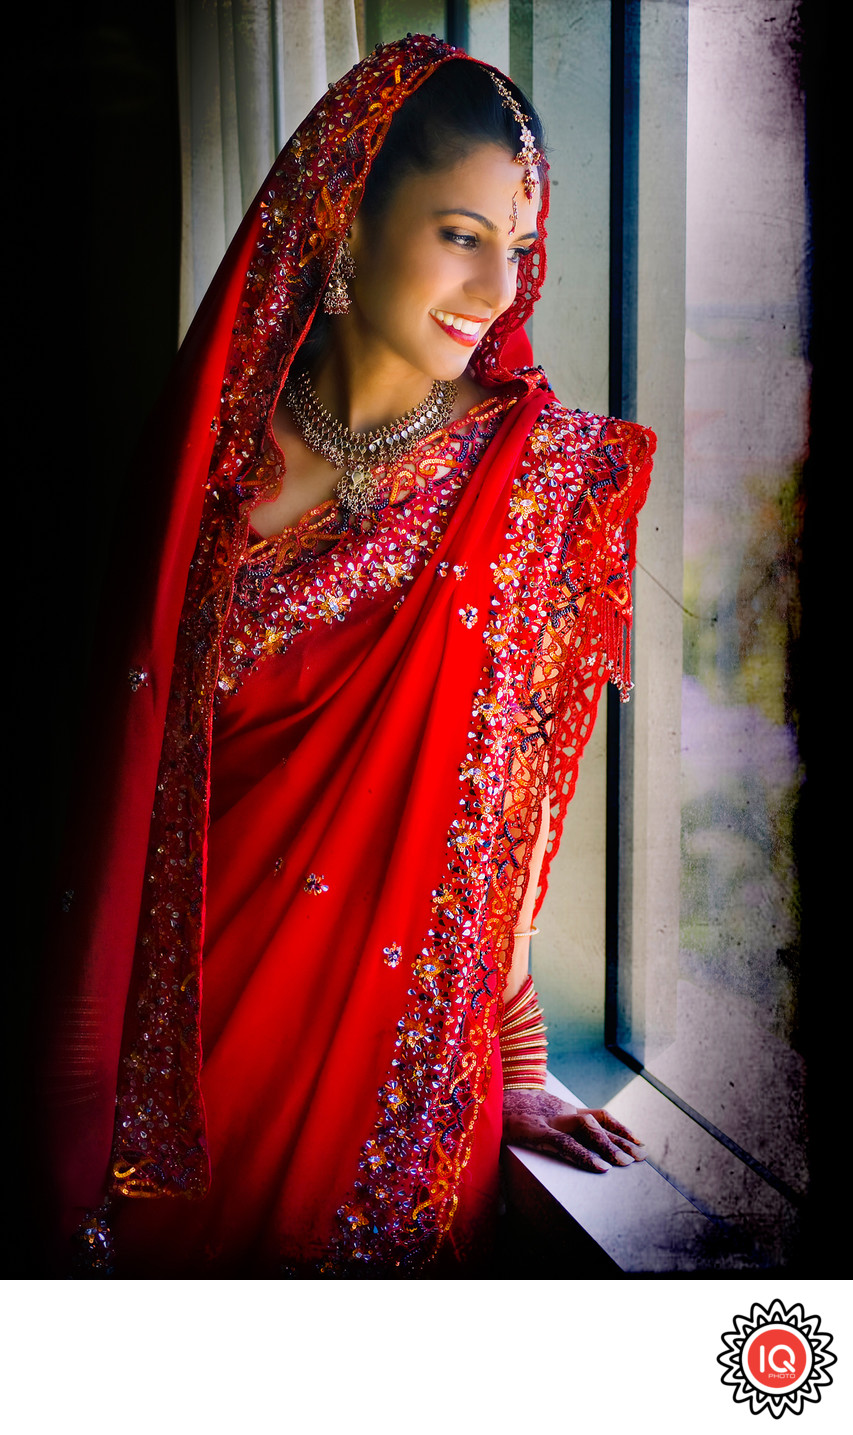 Bride in a Red Sari